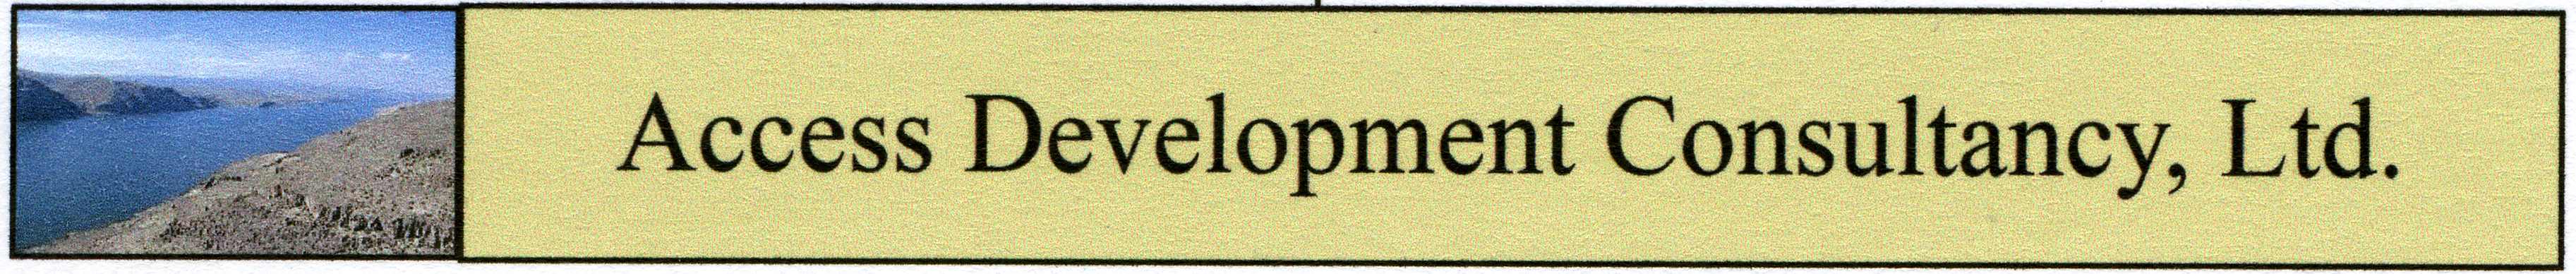 Access Development Consultancy, Ltd. Logo